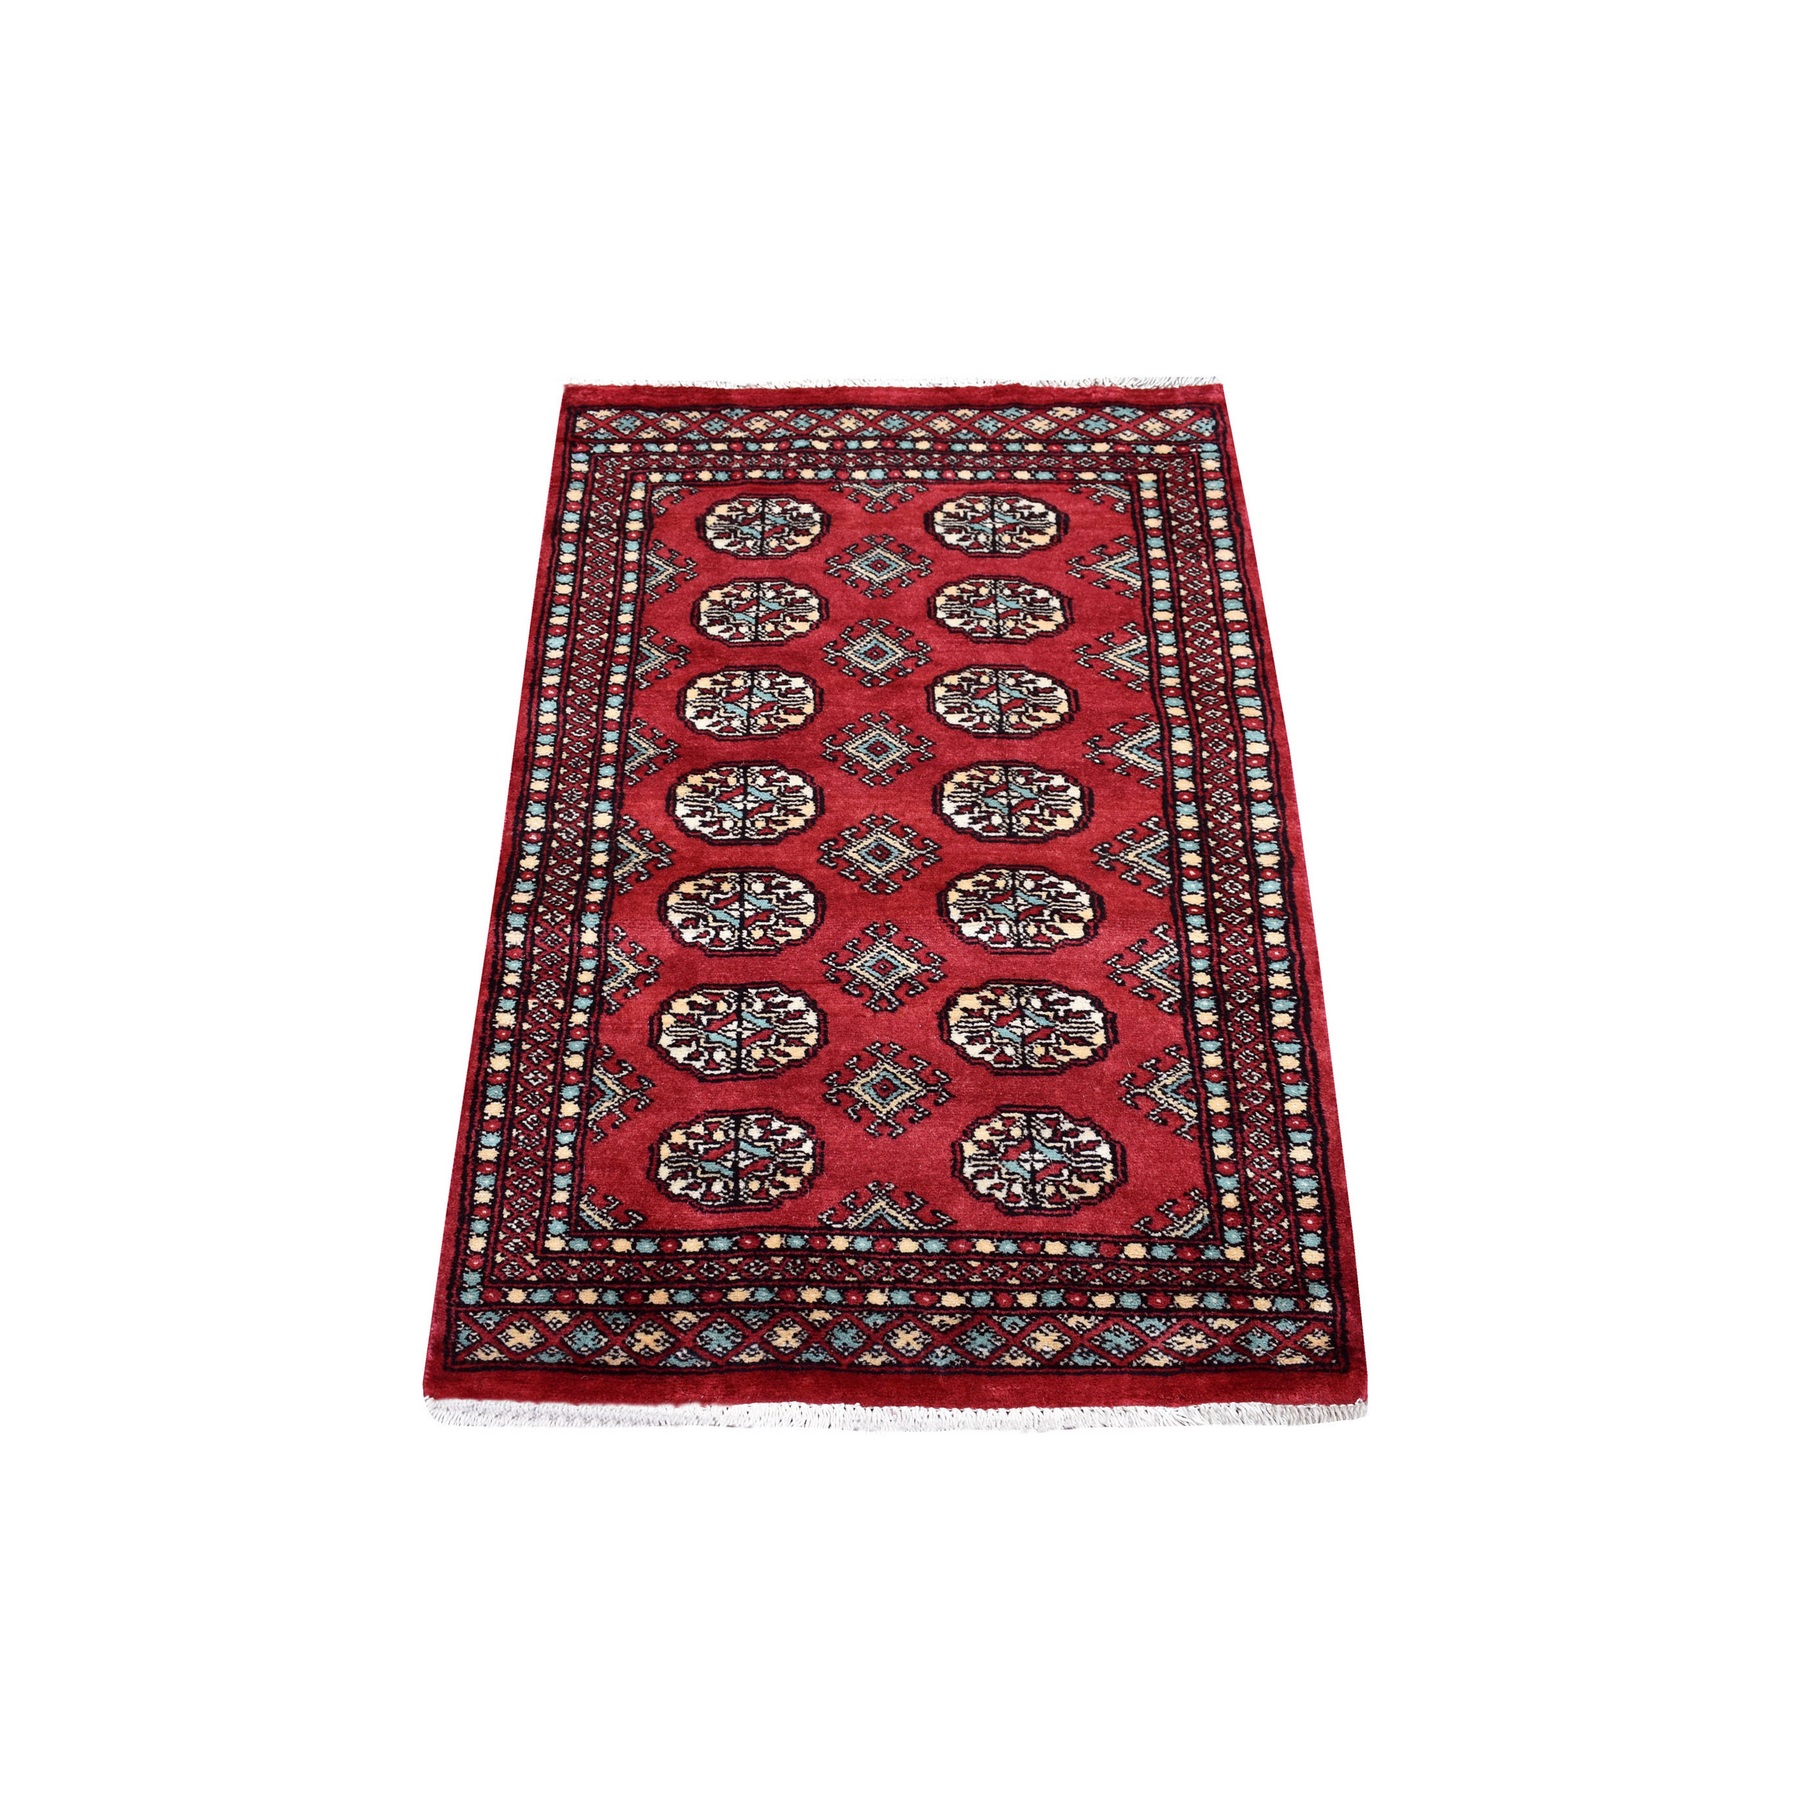 2'7"x3'9" Deep Rich Red Silky Wool Hand Woven Mori Bokara Oriental Rug 